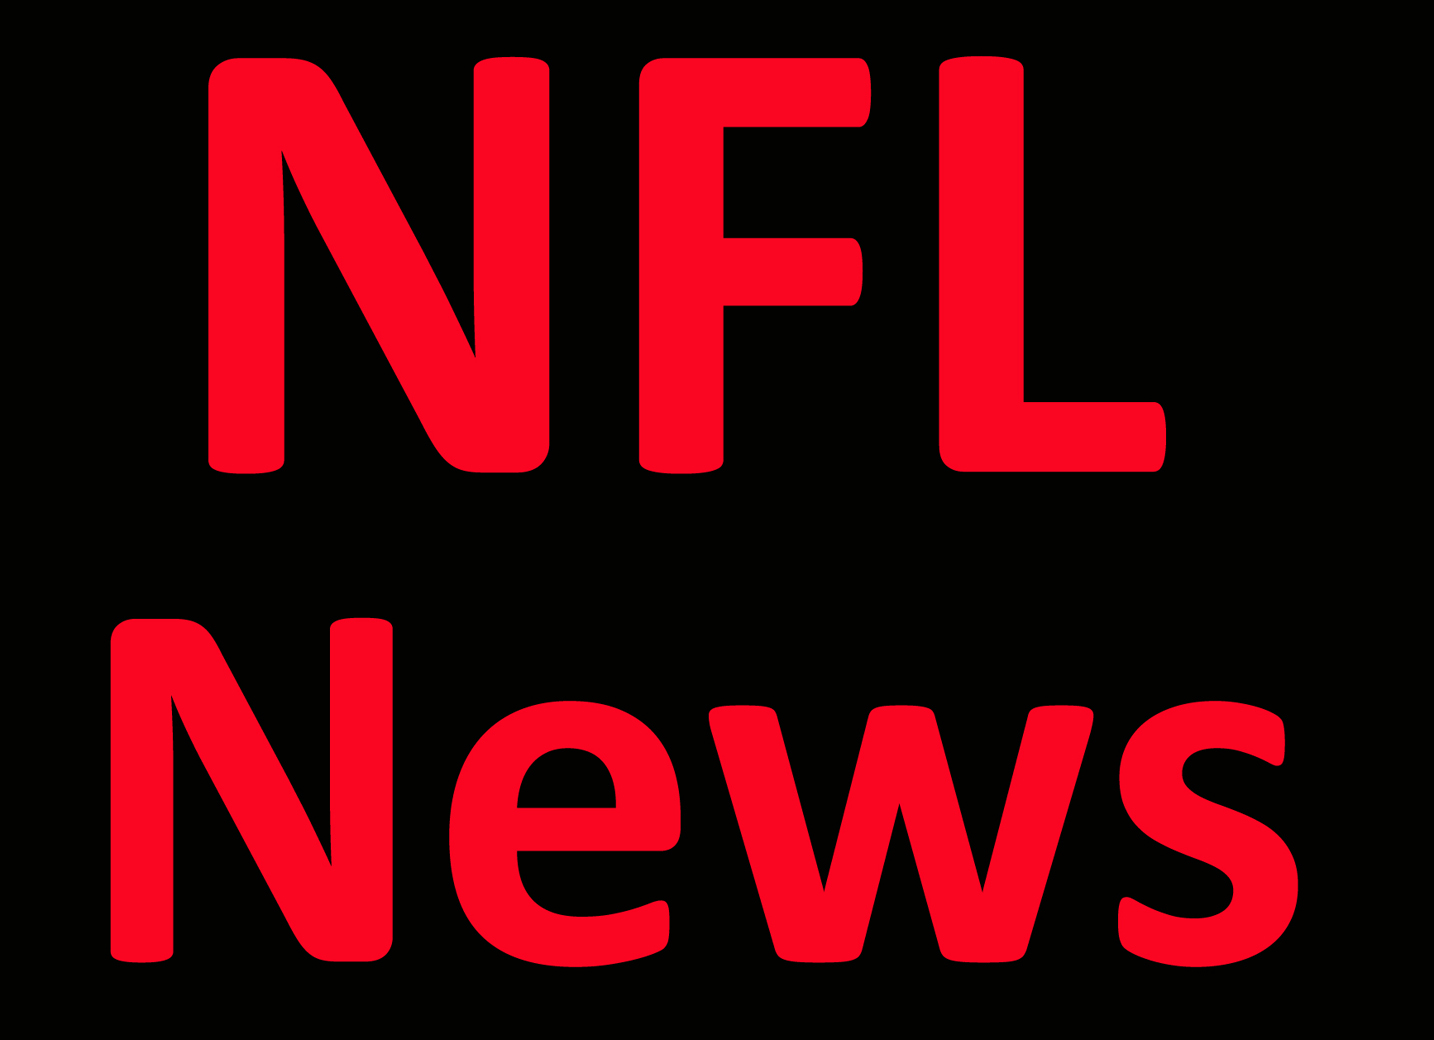 NFL News: Steelers fan relish, celebrate Ben Roethlisberger in final weeks of quarterback’s era Per Report